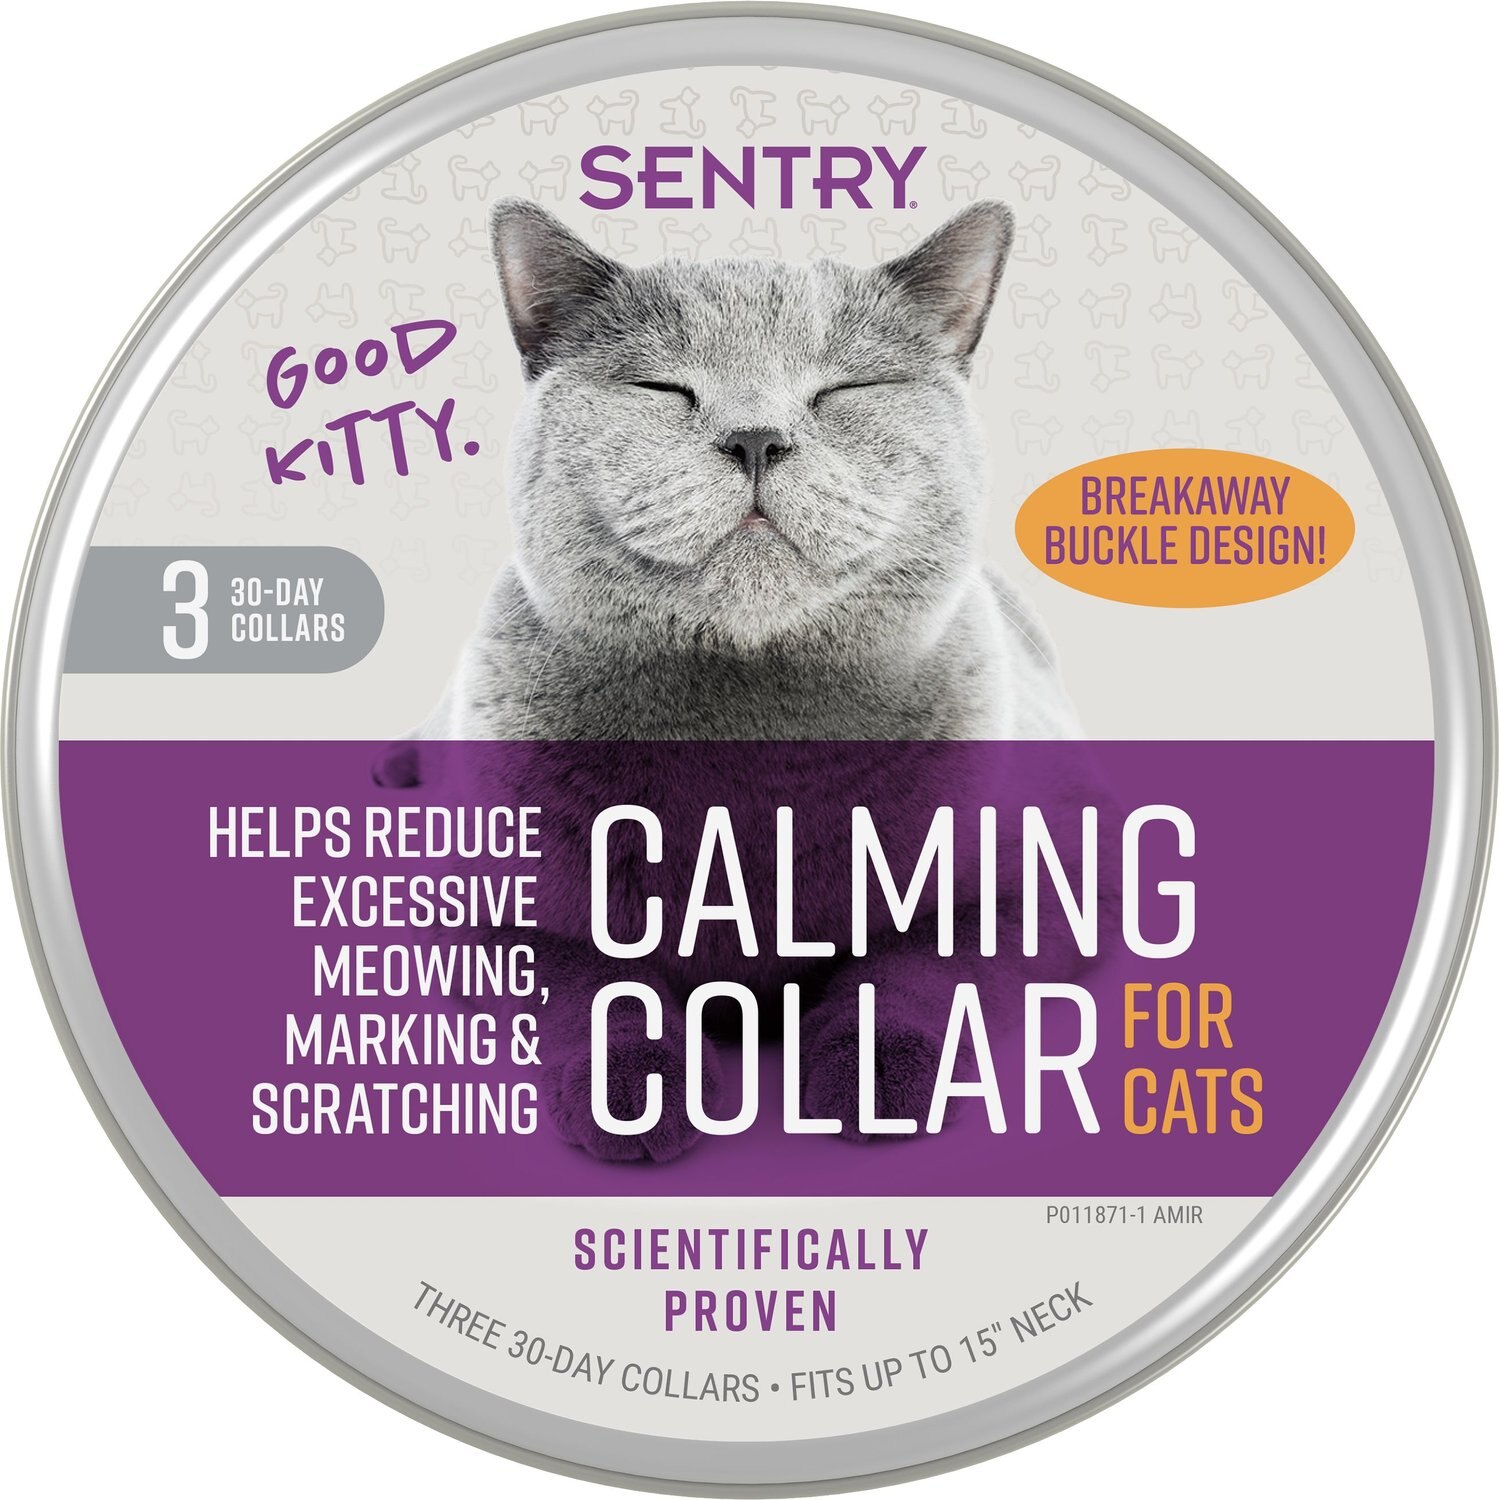 Sentry Good Behavior Calming Collar for Cats